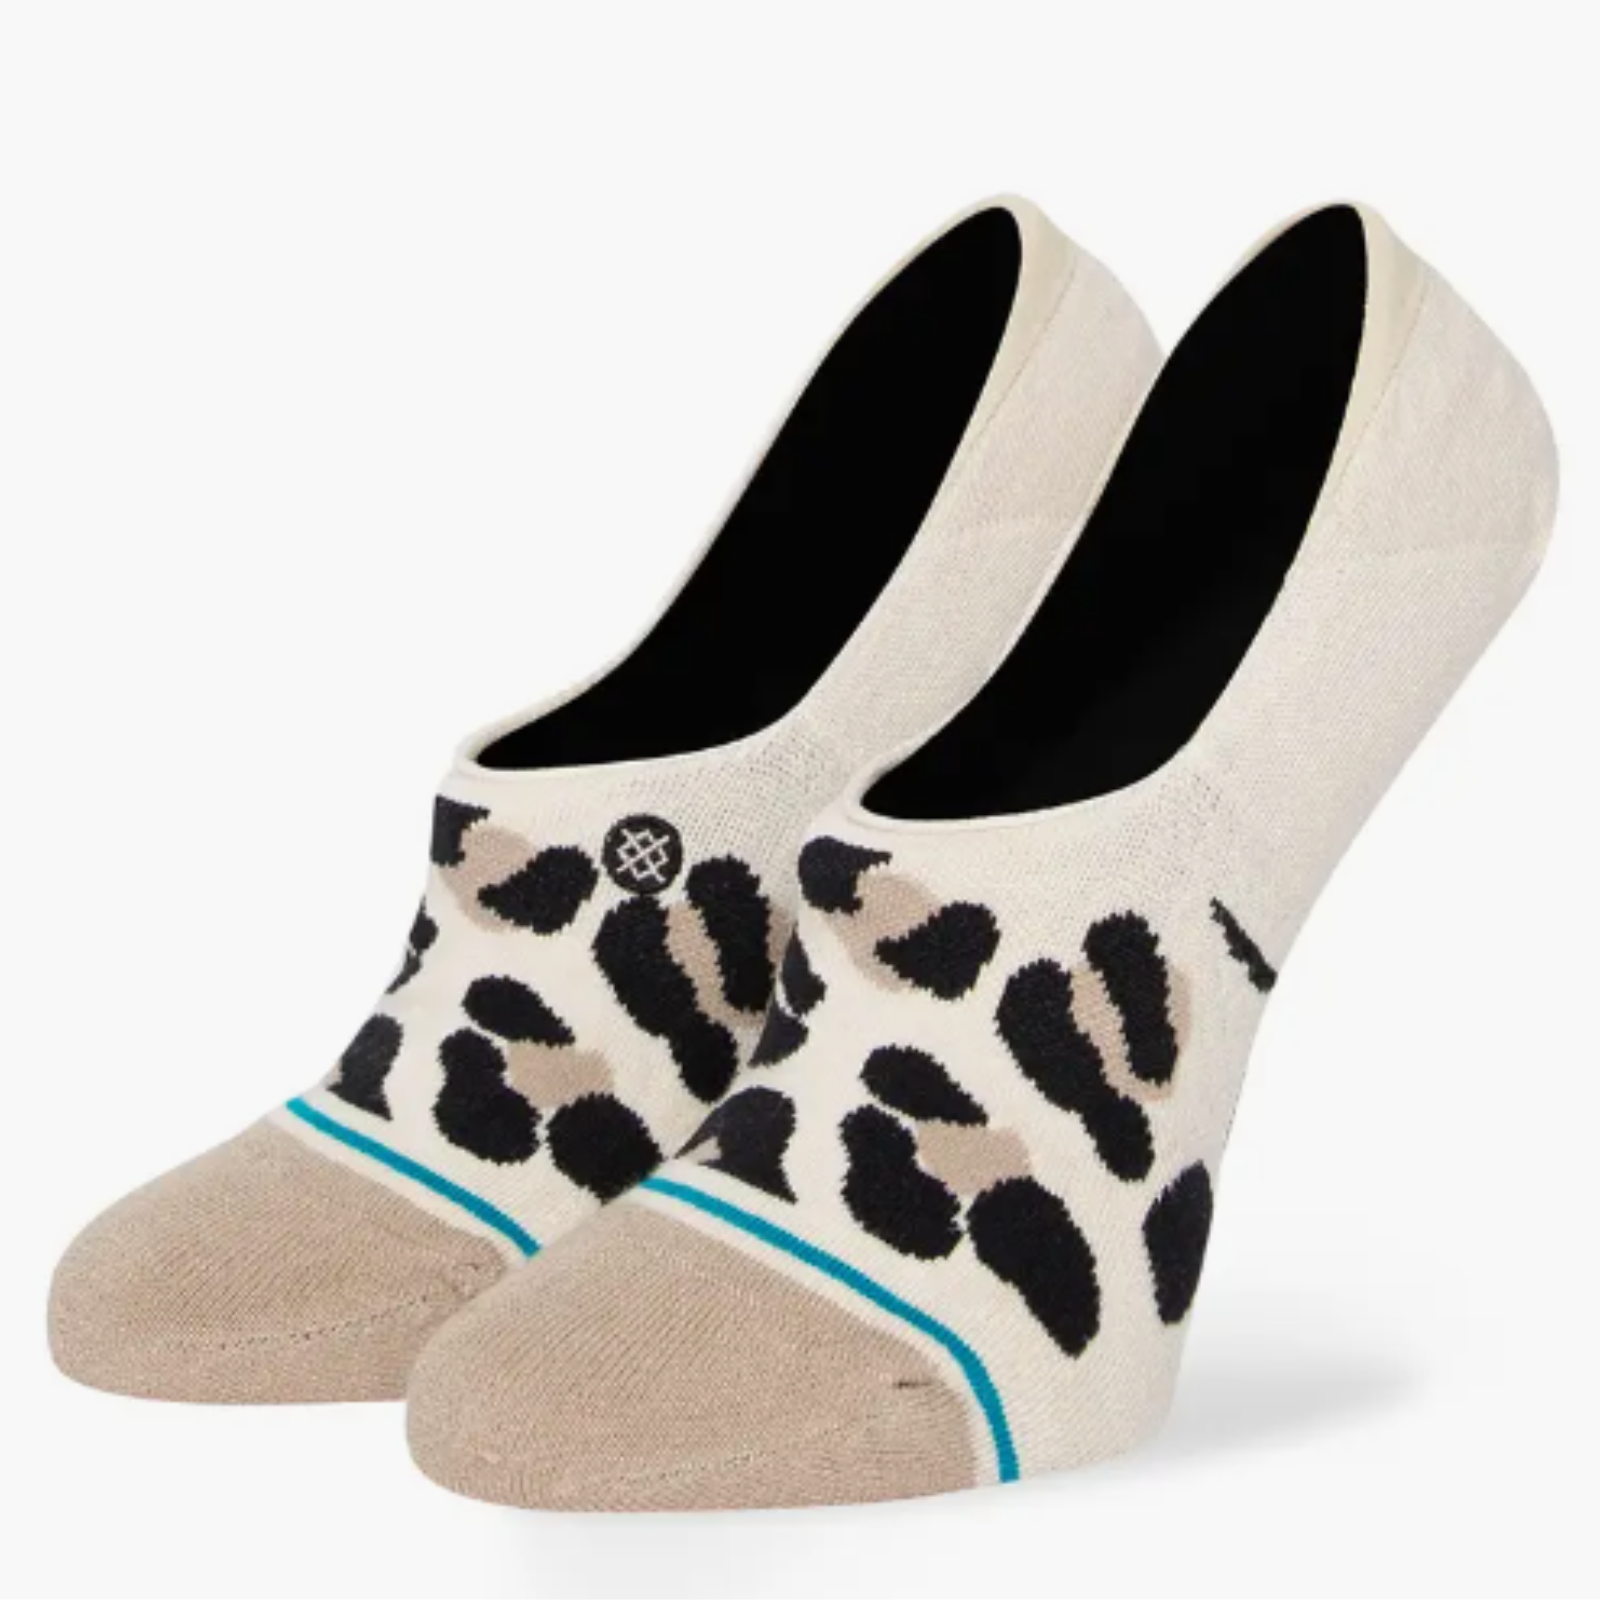 Stance Spot On No Show women's sock featuring leopard print. Socks shown on display feet. 